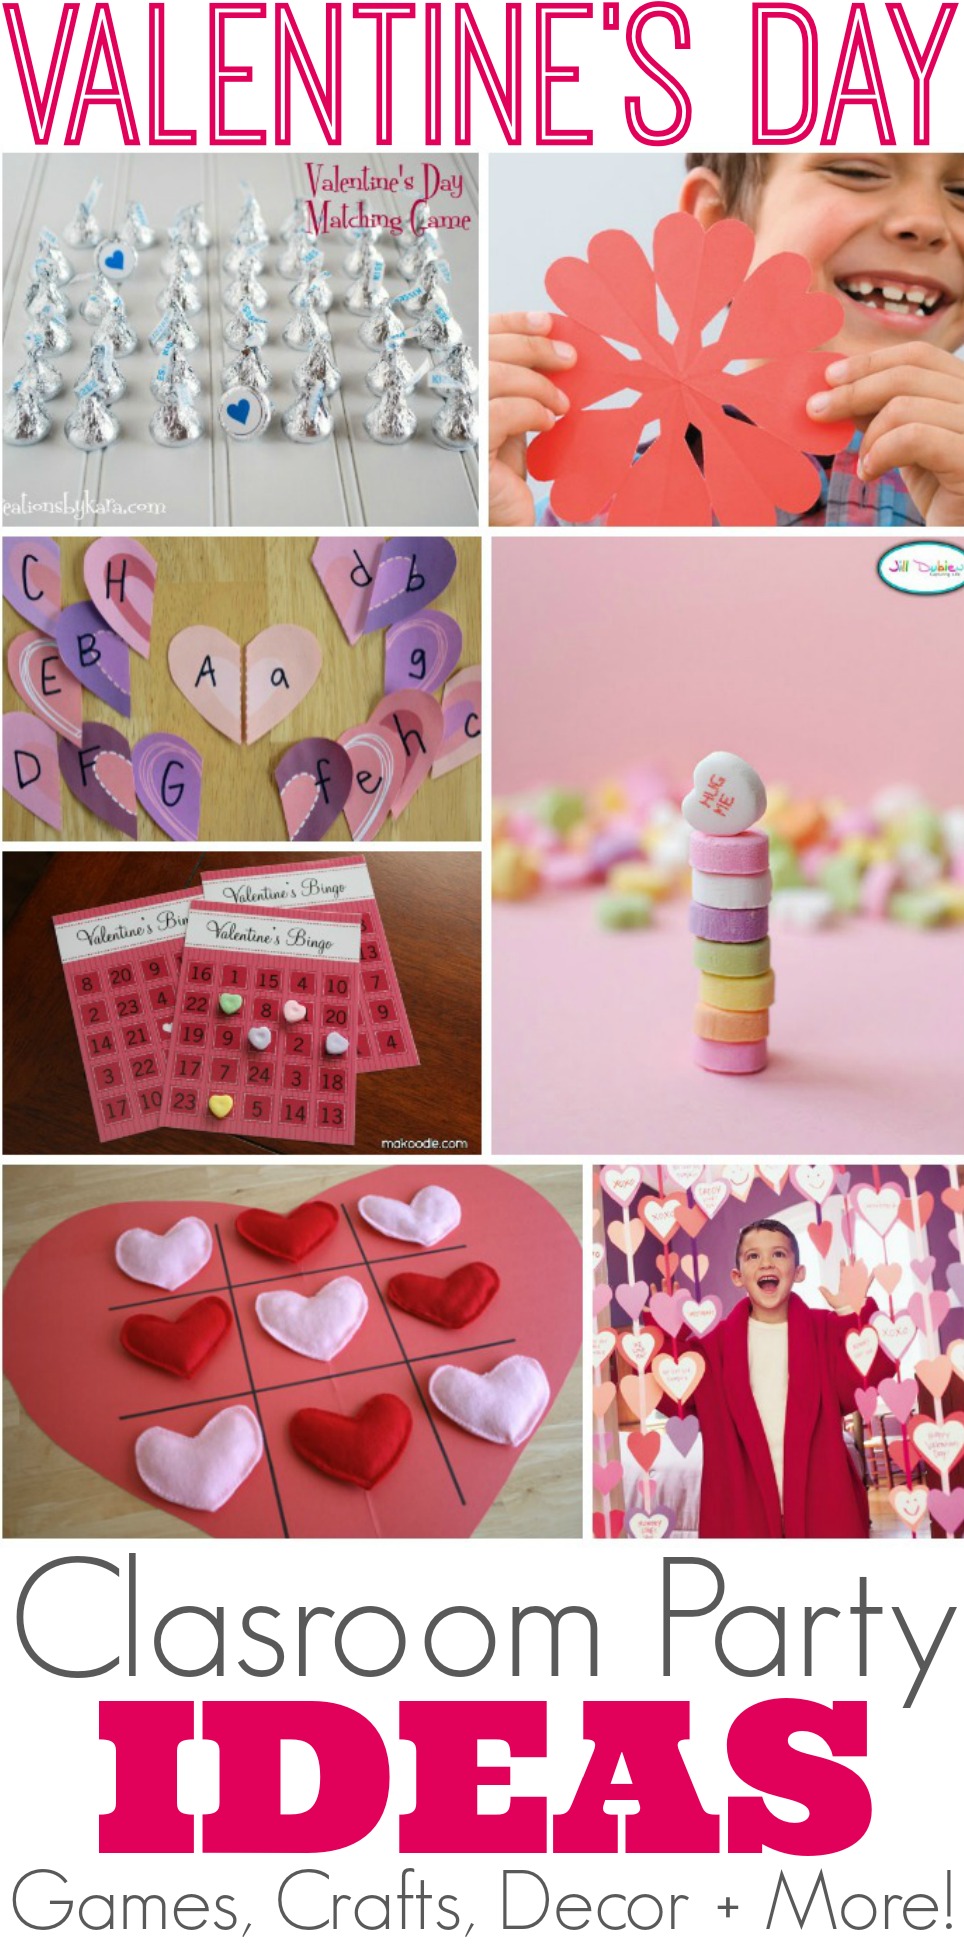 25+ Fantastic Valentine Class Party Ideas 